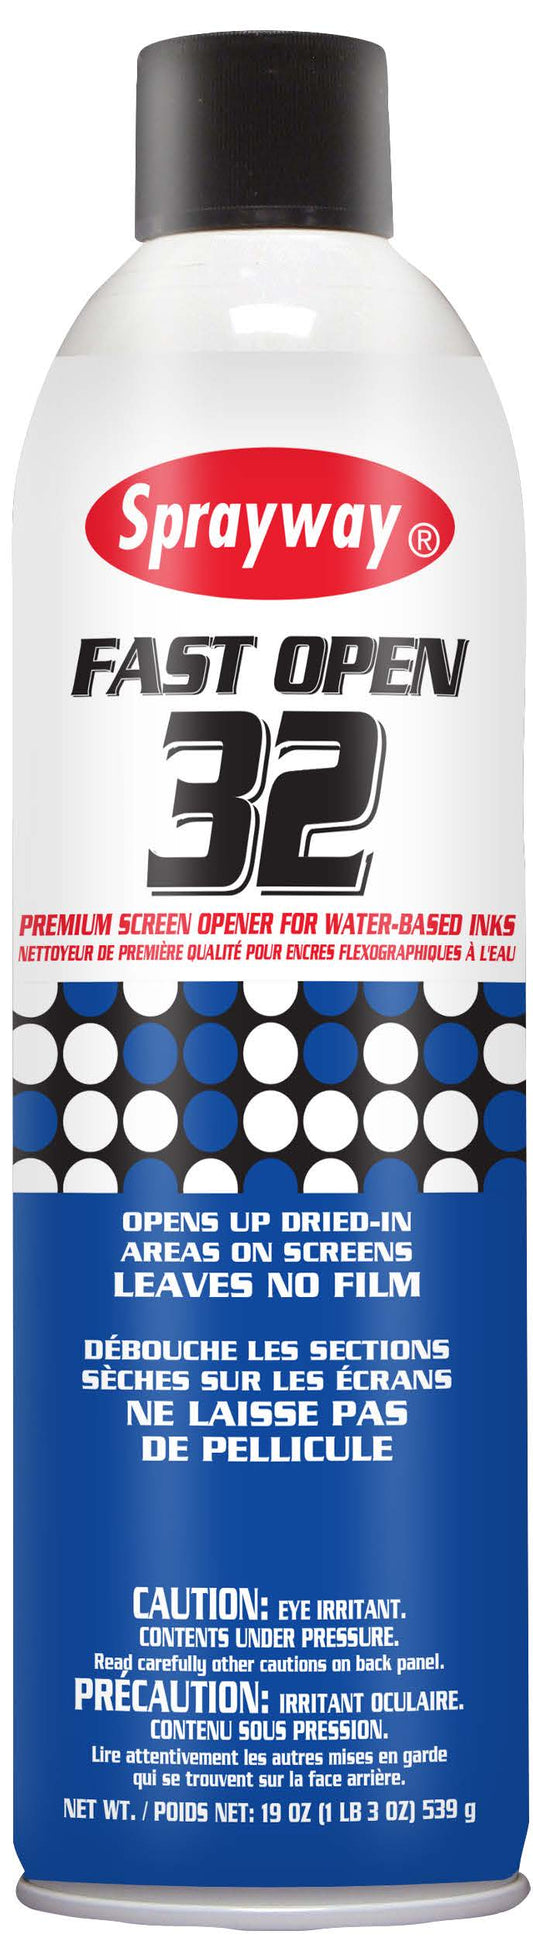 Sprayway Fast Open 32 Premium Based Screen Opener